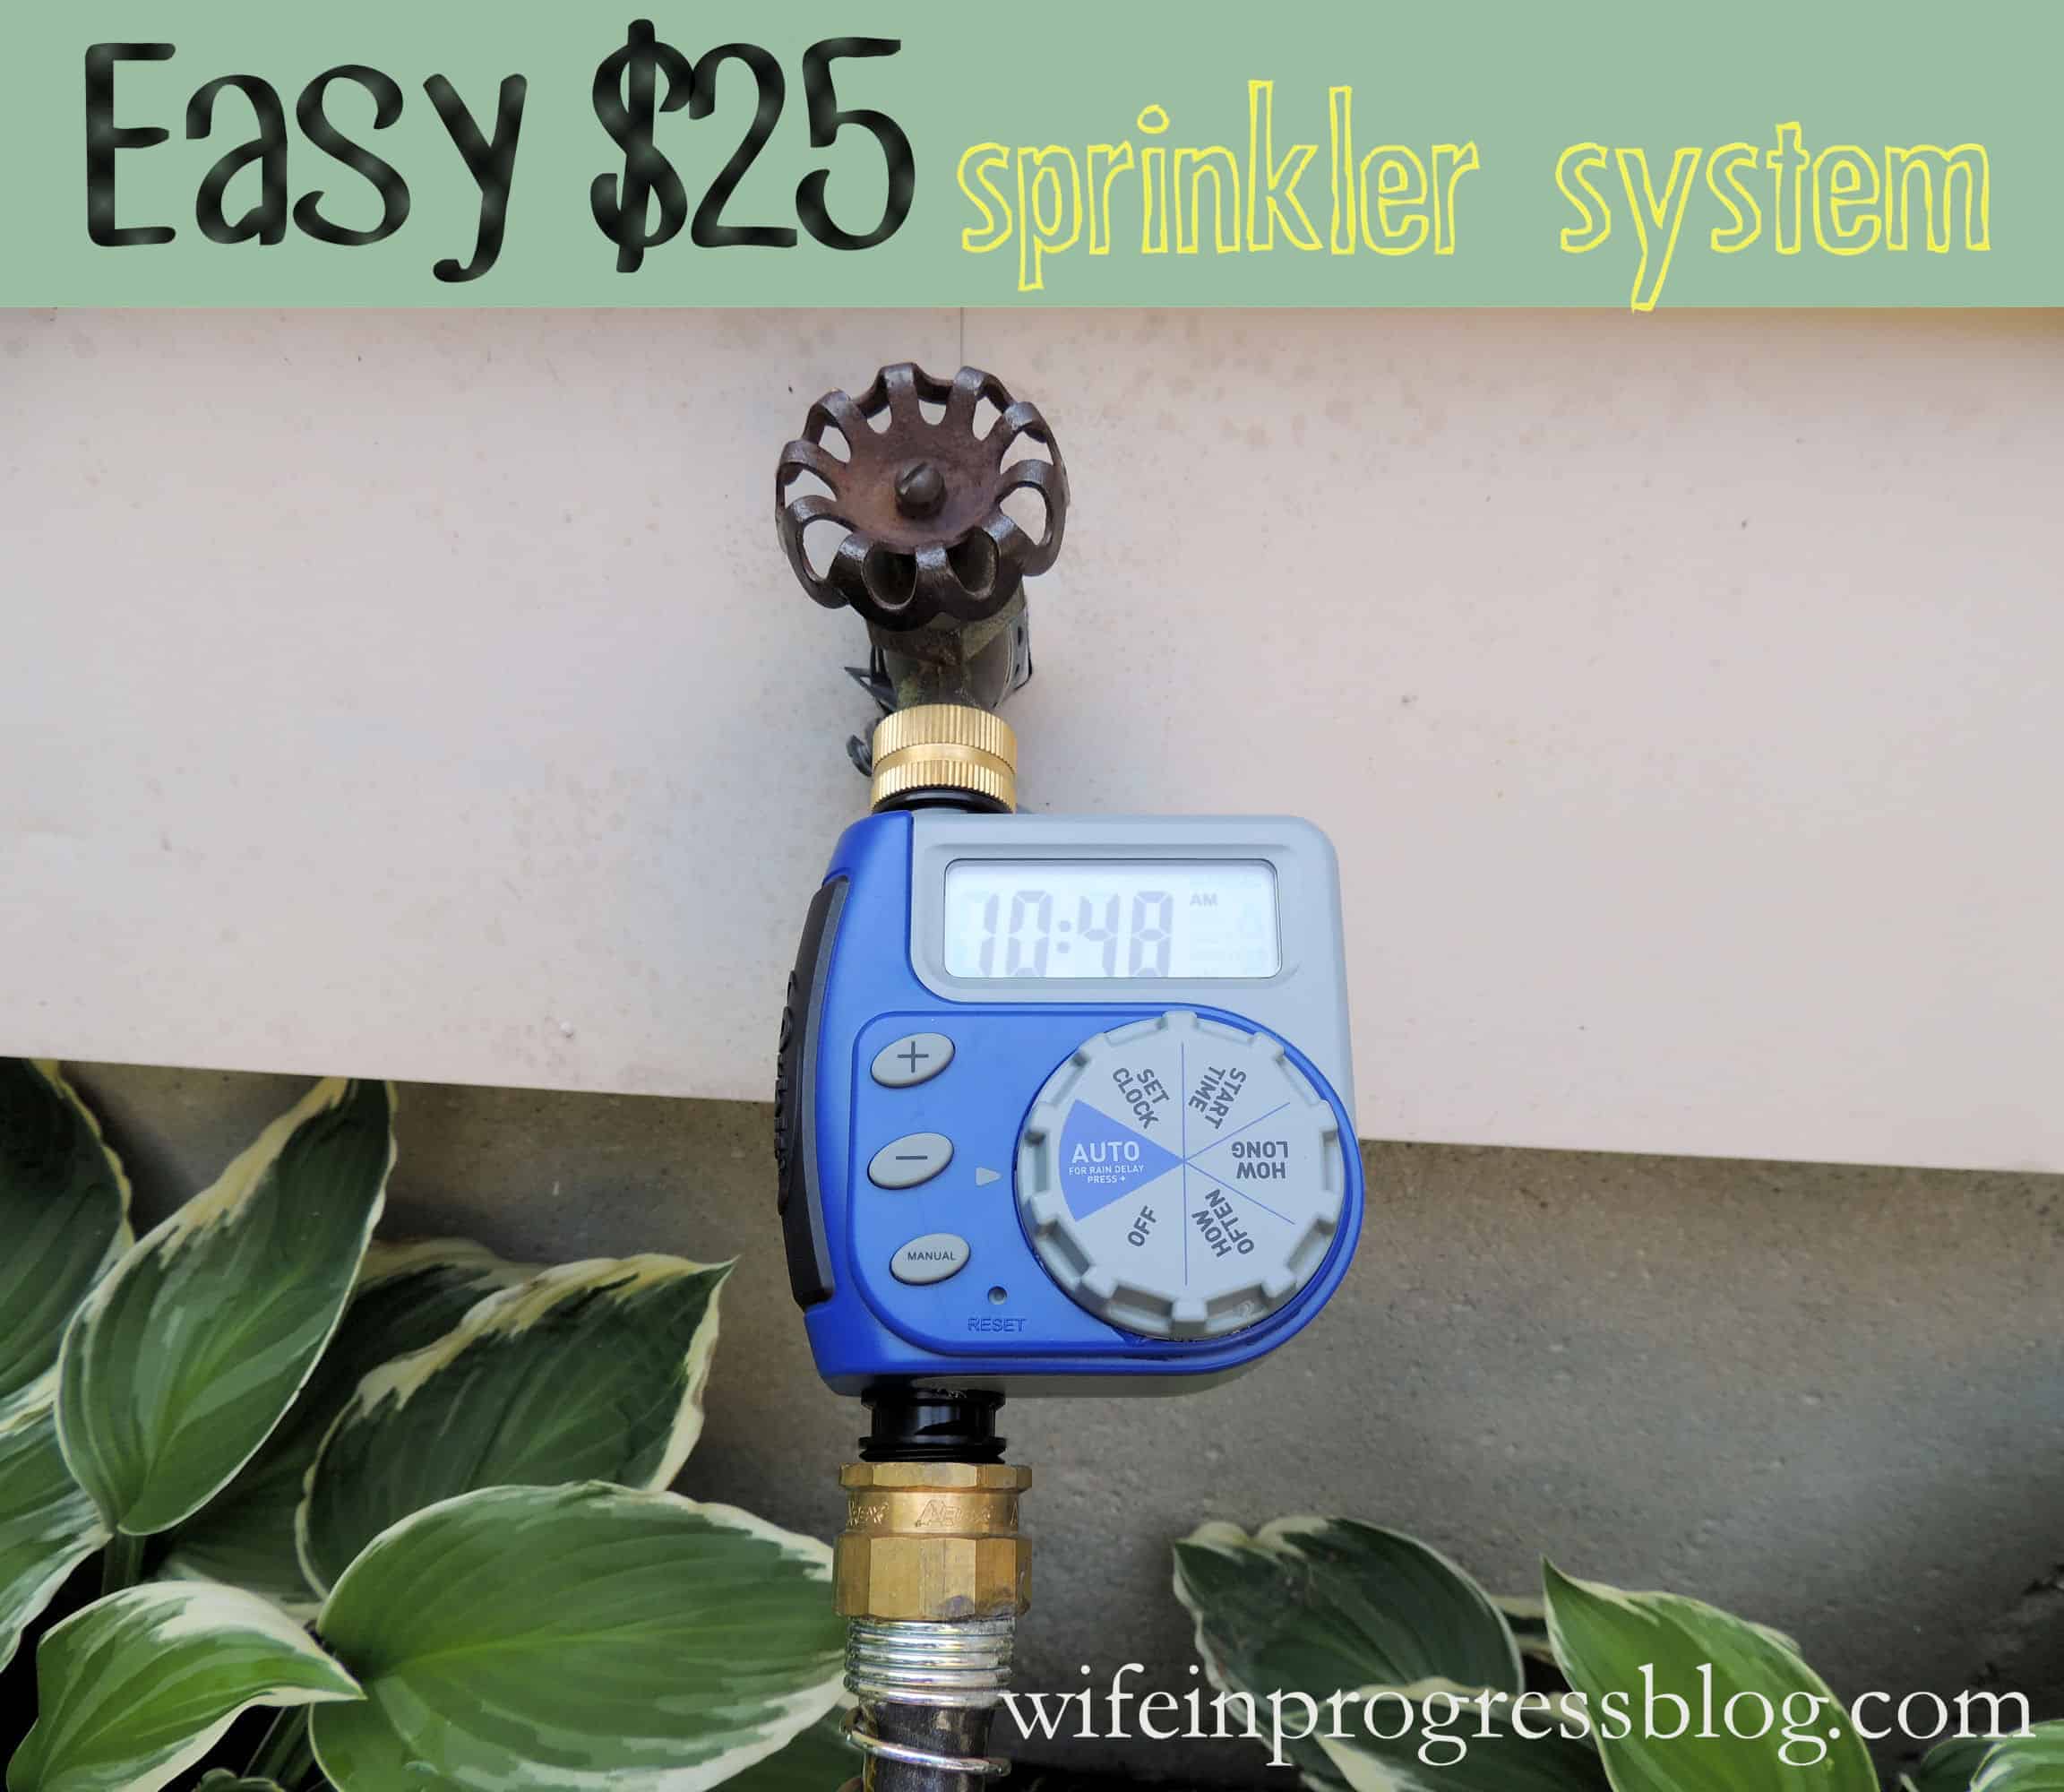 Easy $25 sprinkler system: sprinkler timer system installed among low, green shrubs